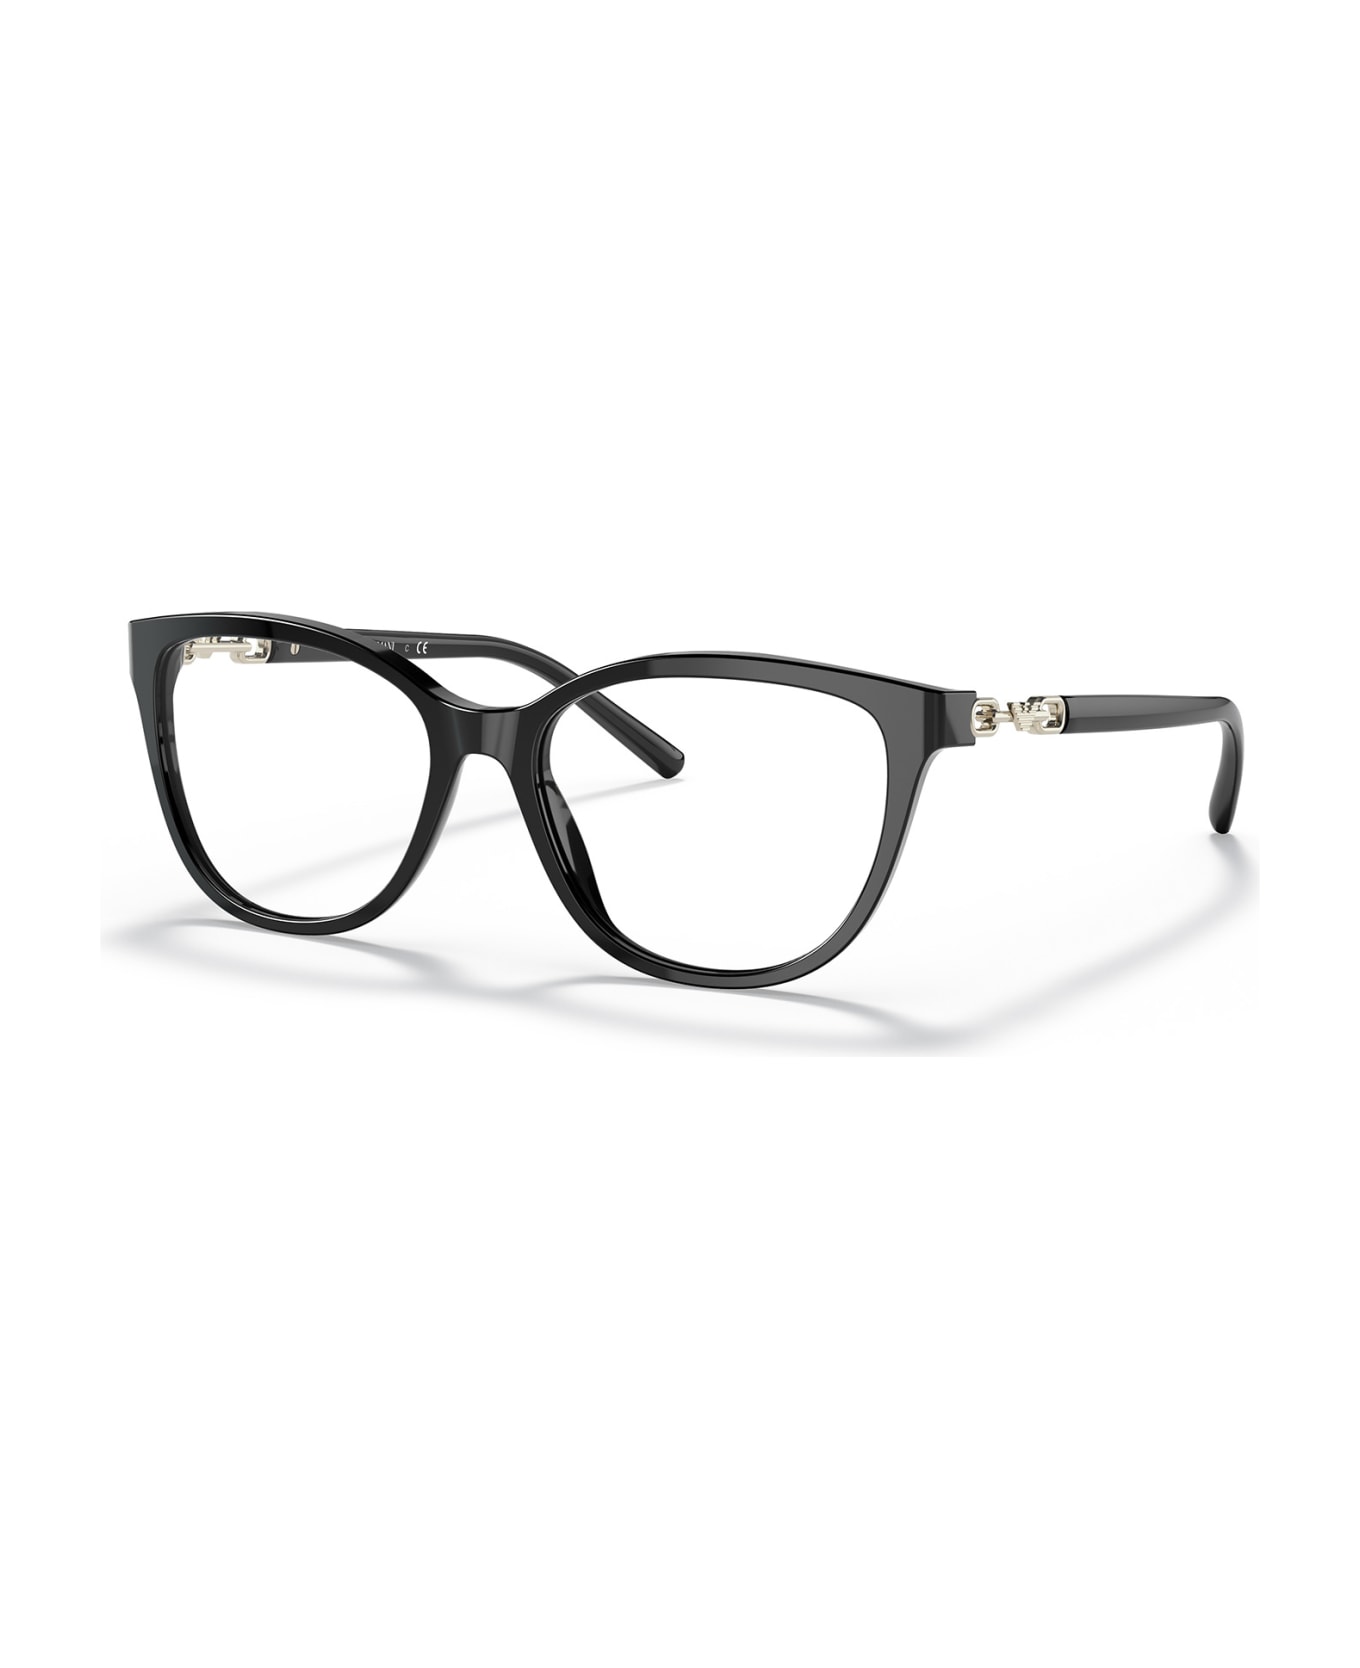 Emporio Armani Ea3190 Black Glasses - Black アイウェア